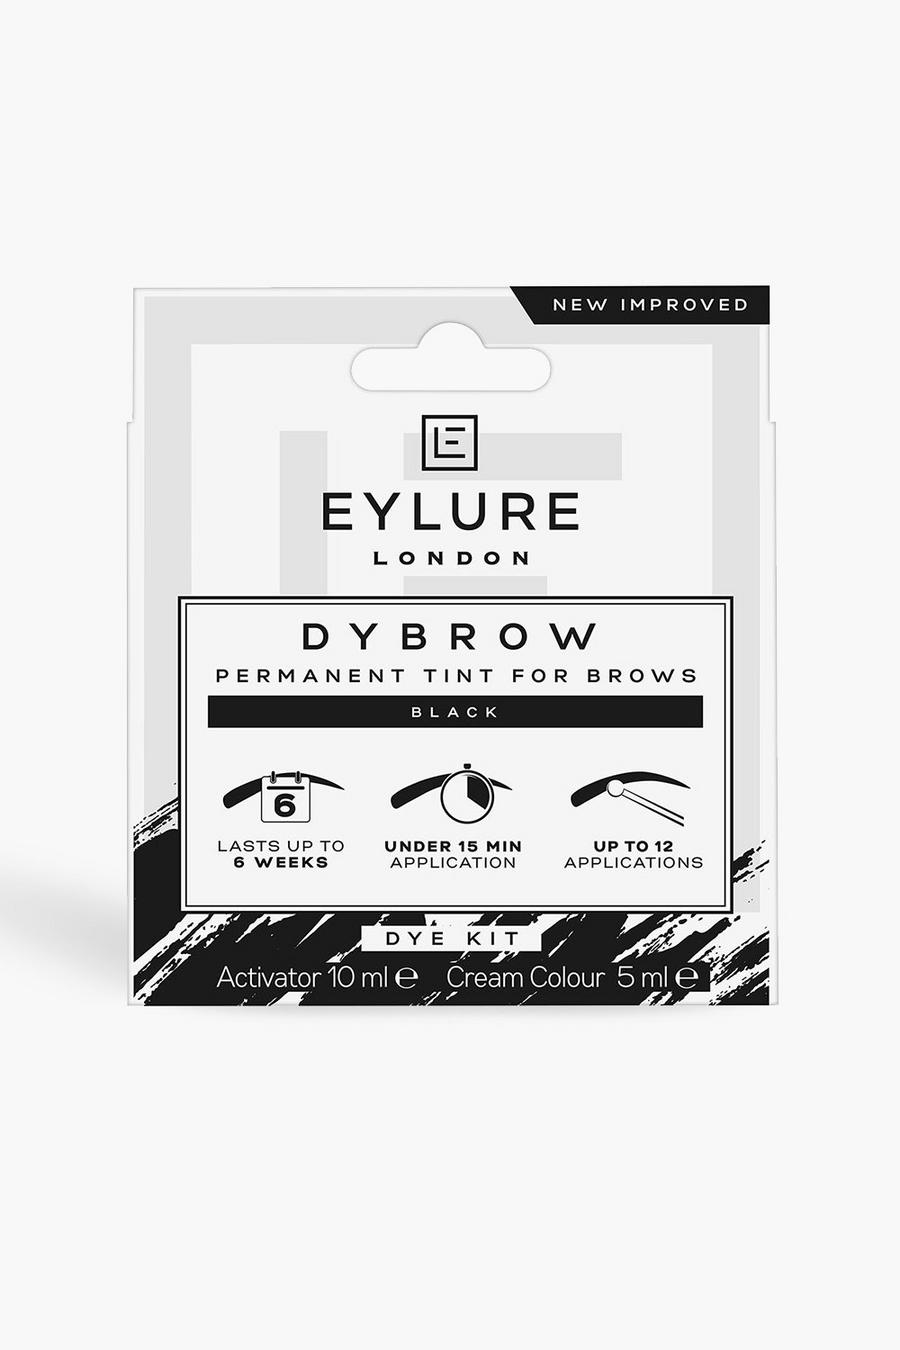 Black Eylure Dybrow Permanent Tint Ögonbrynsfärg - Svart